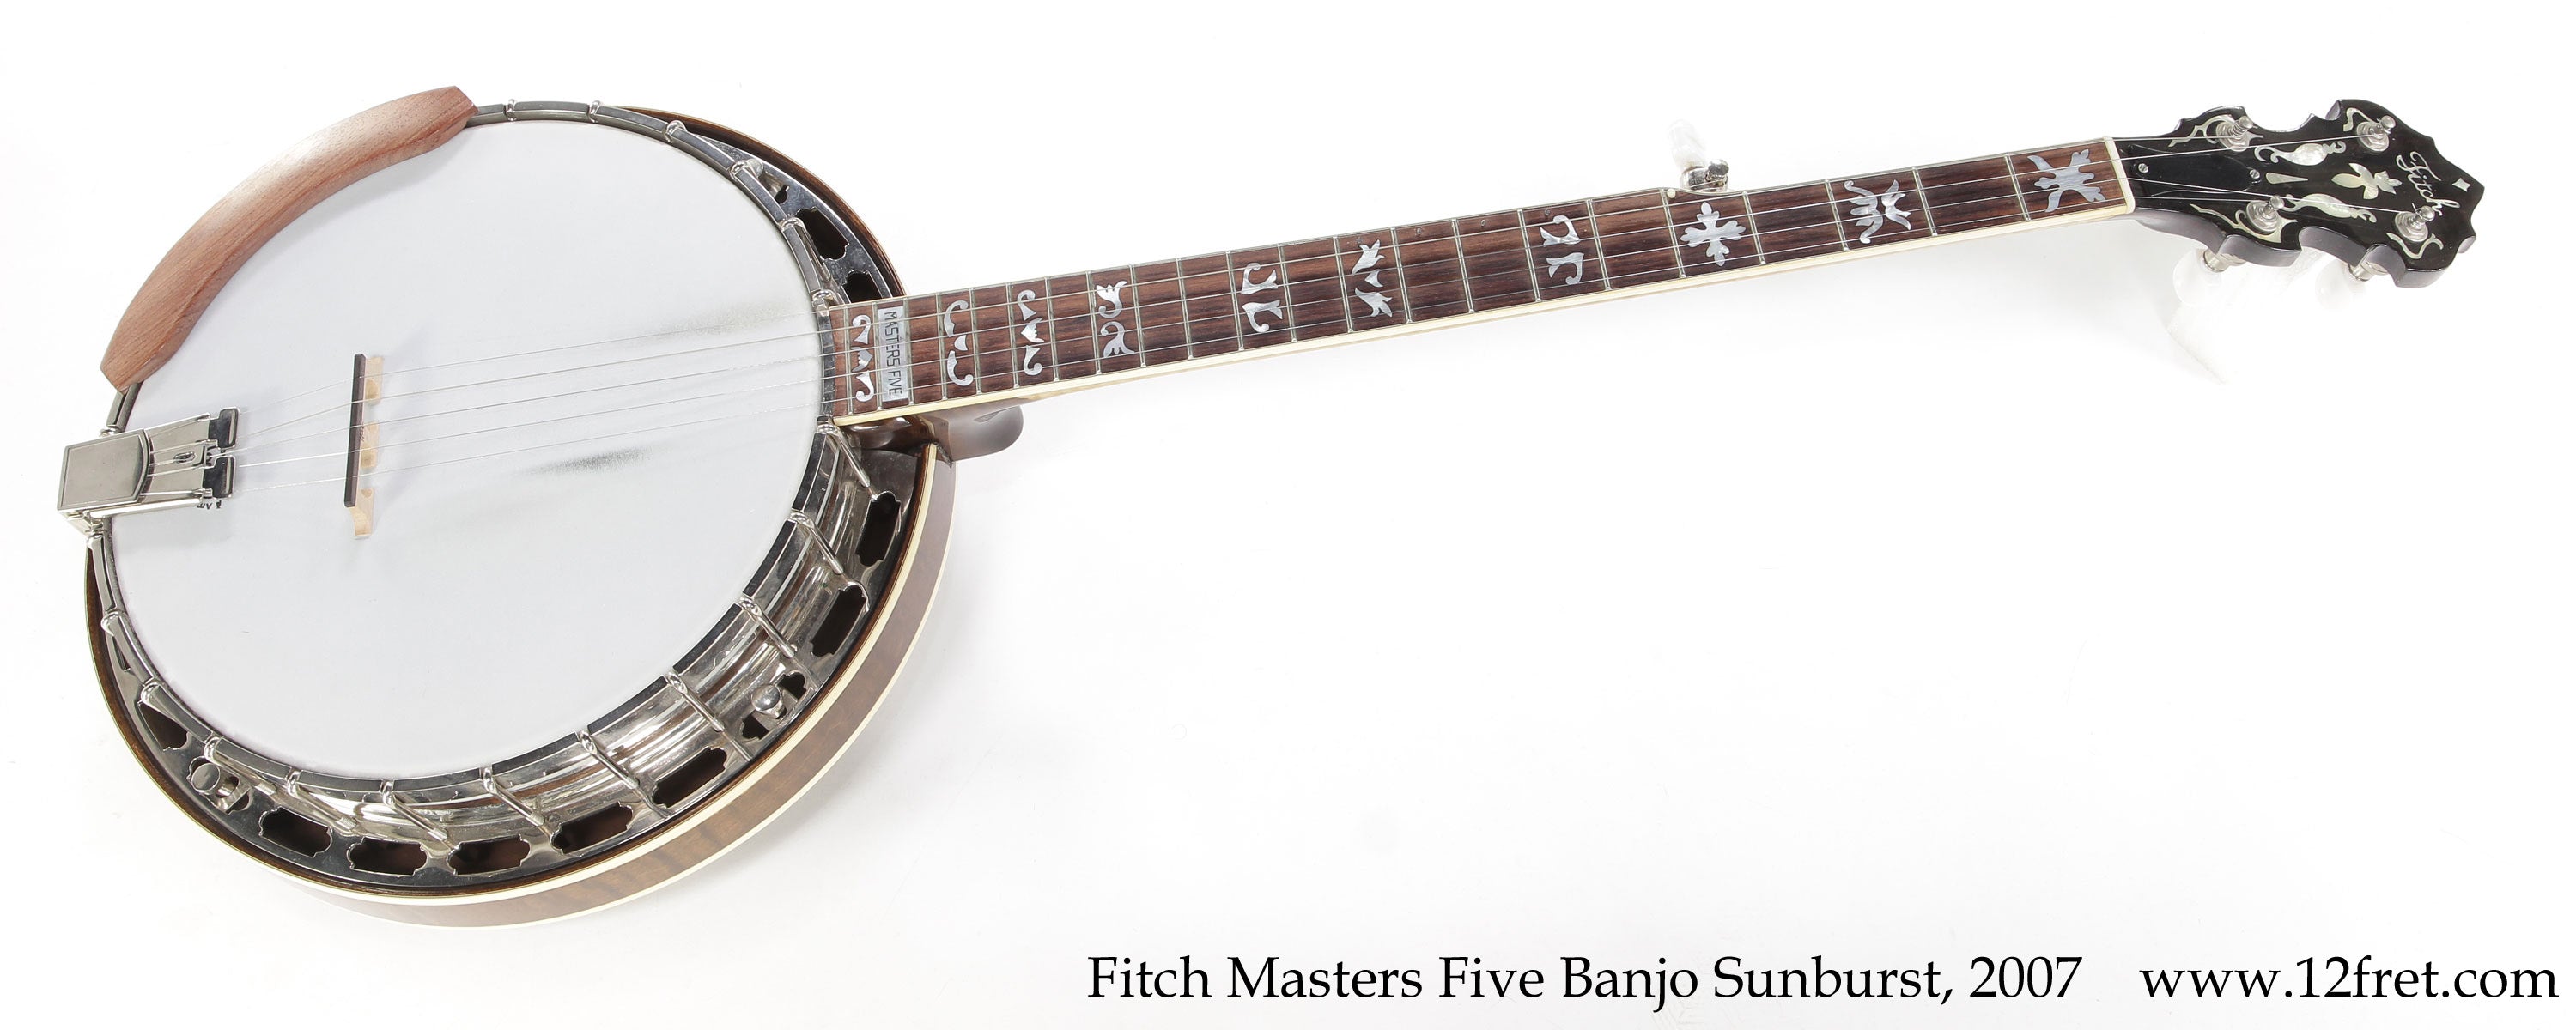 Fitch Masters Five Banjo Sunburst, 2007 - The Twelfth Fret